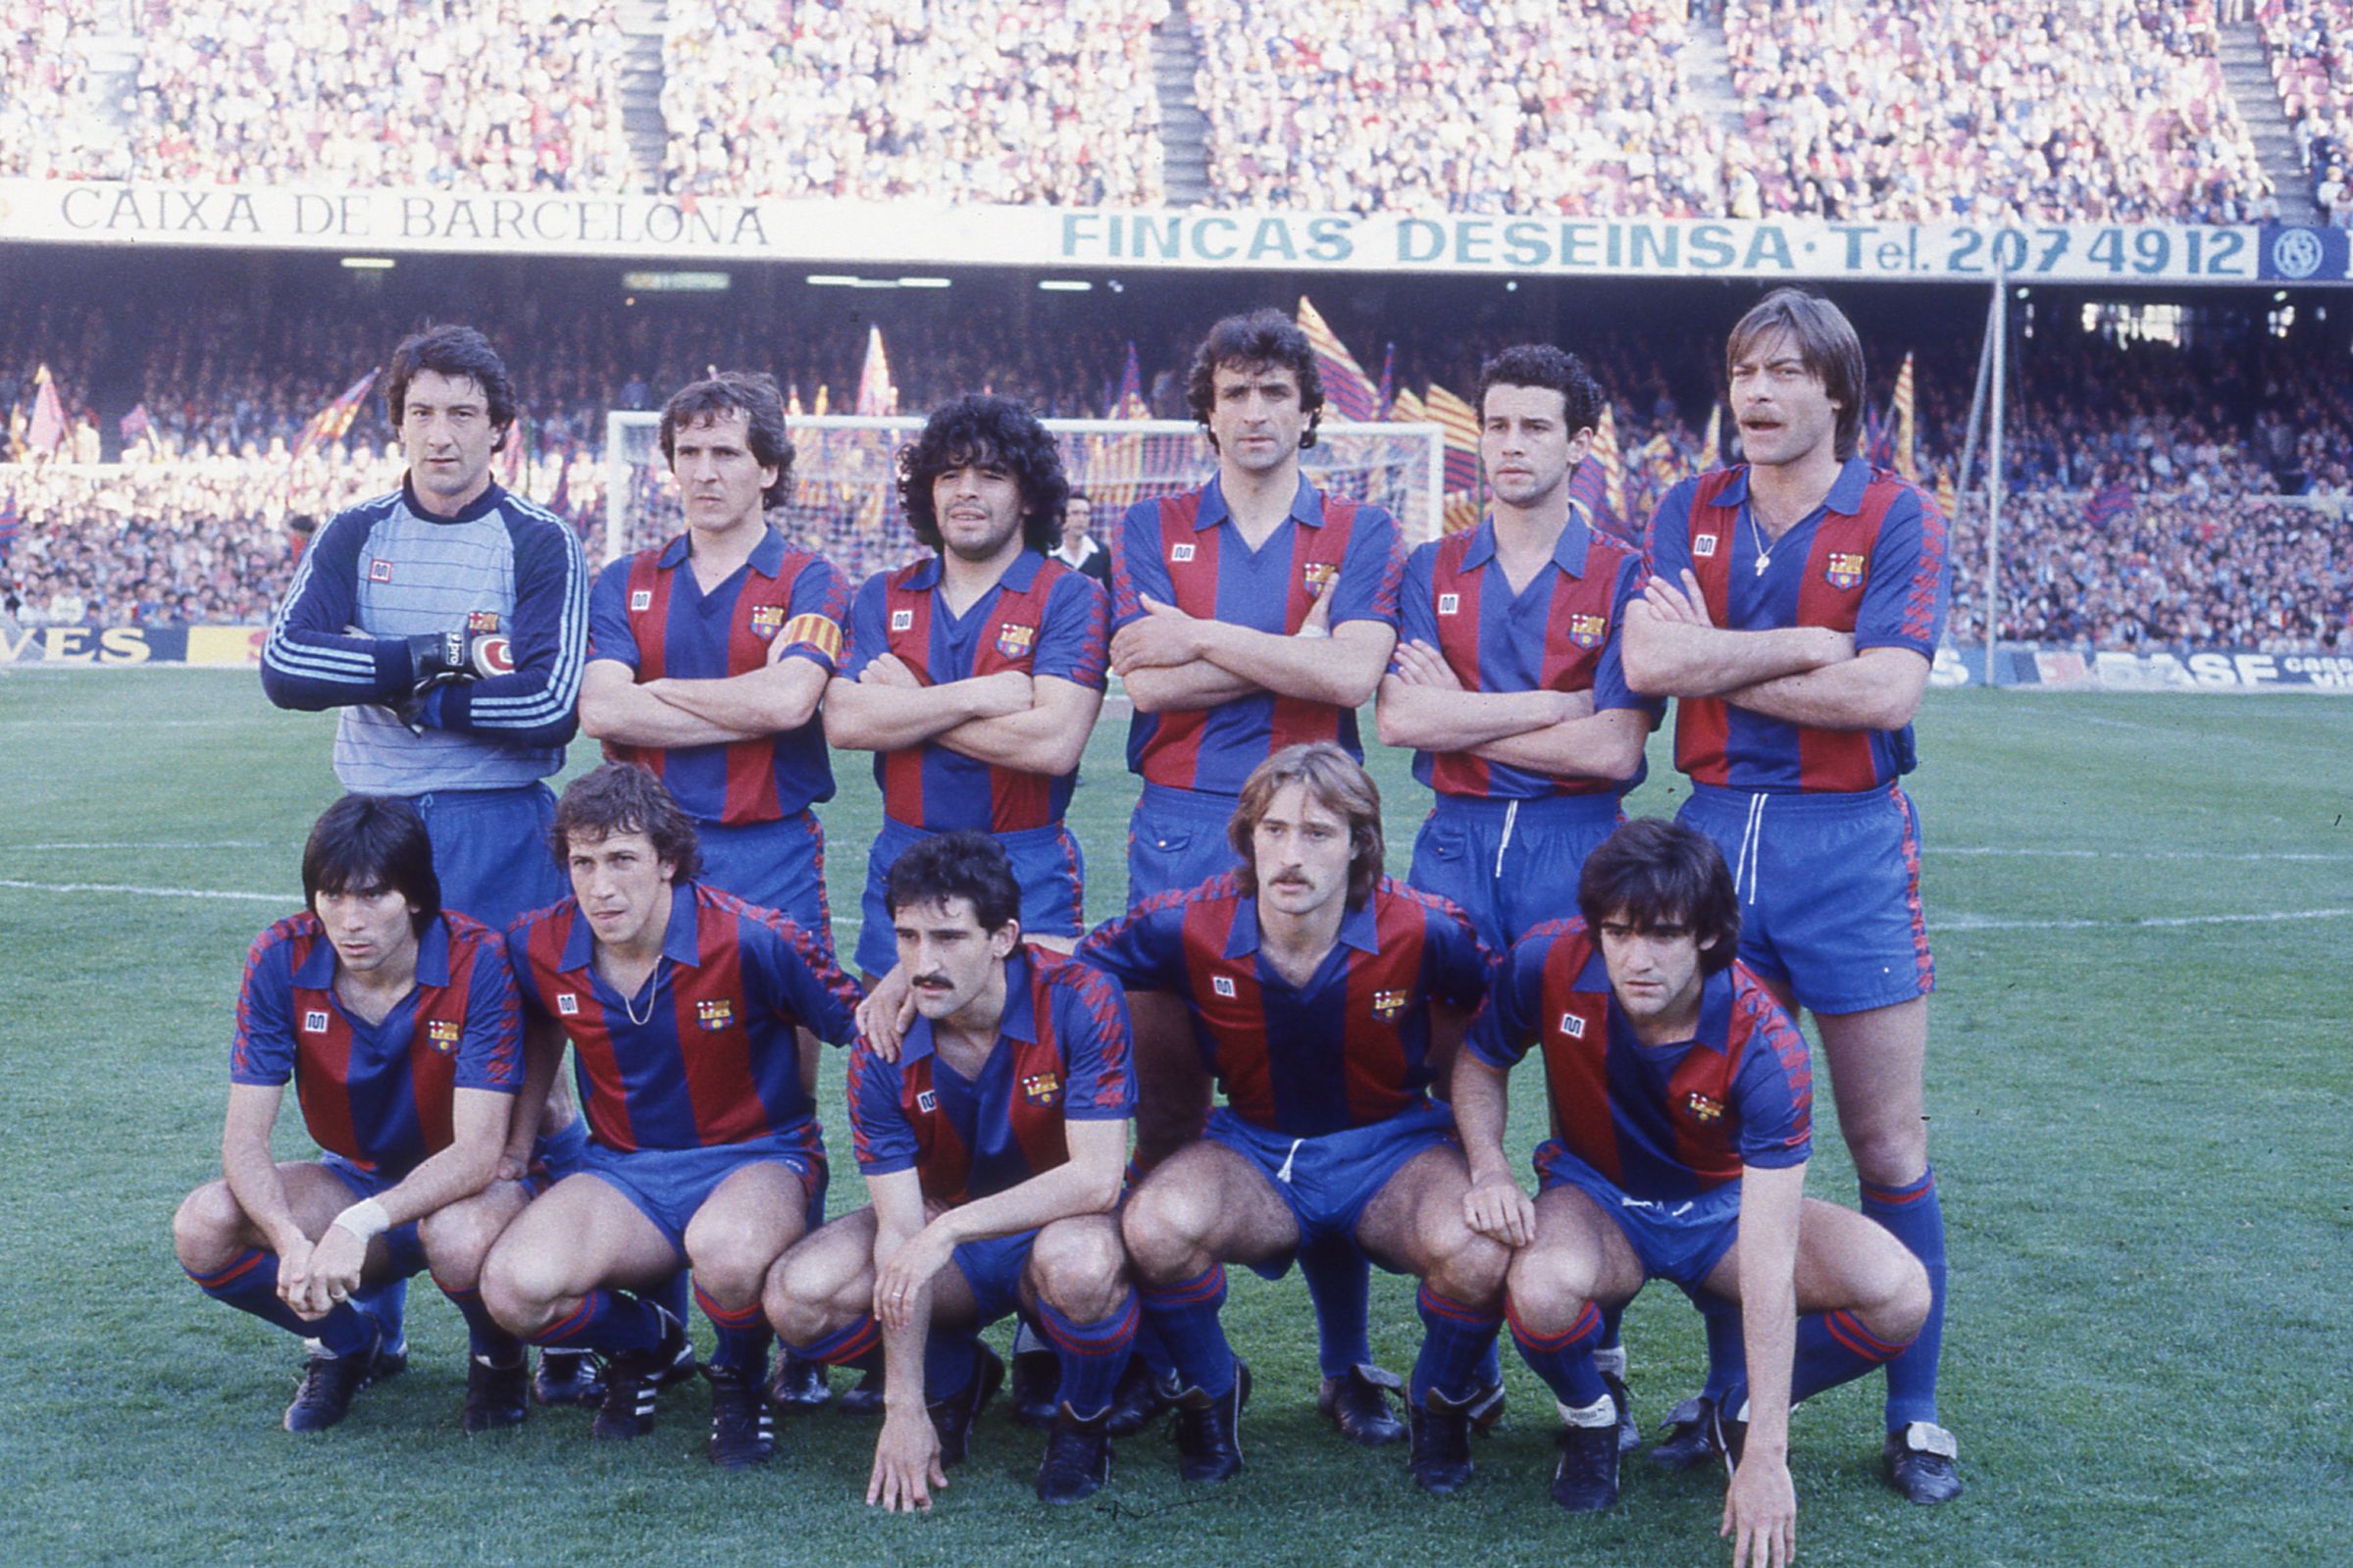 Barça 1984 04 22 vs Espanyol